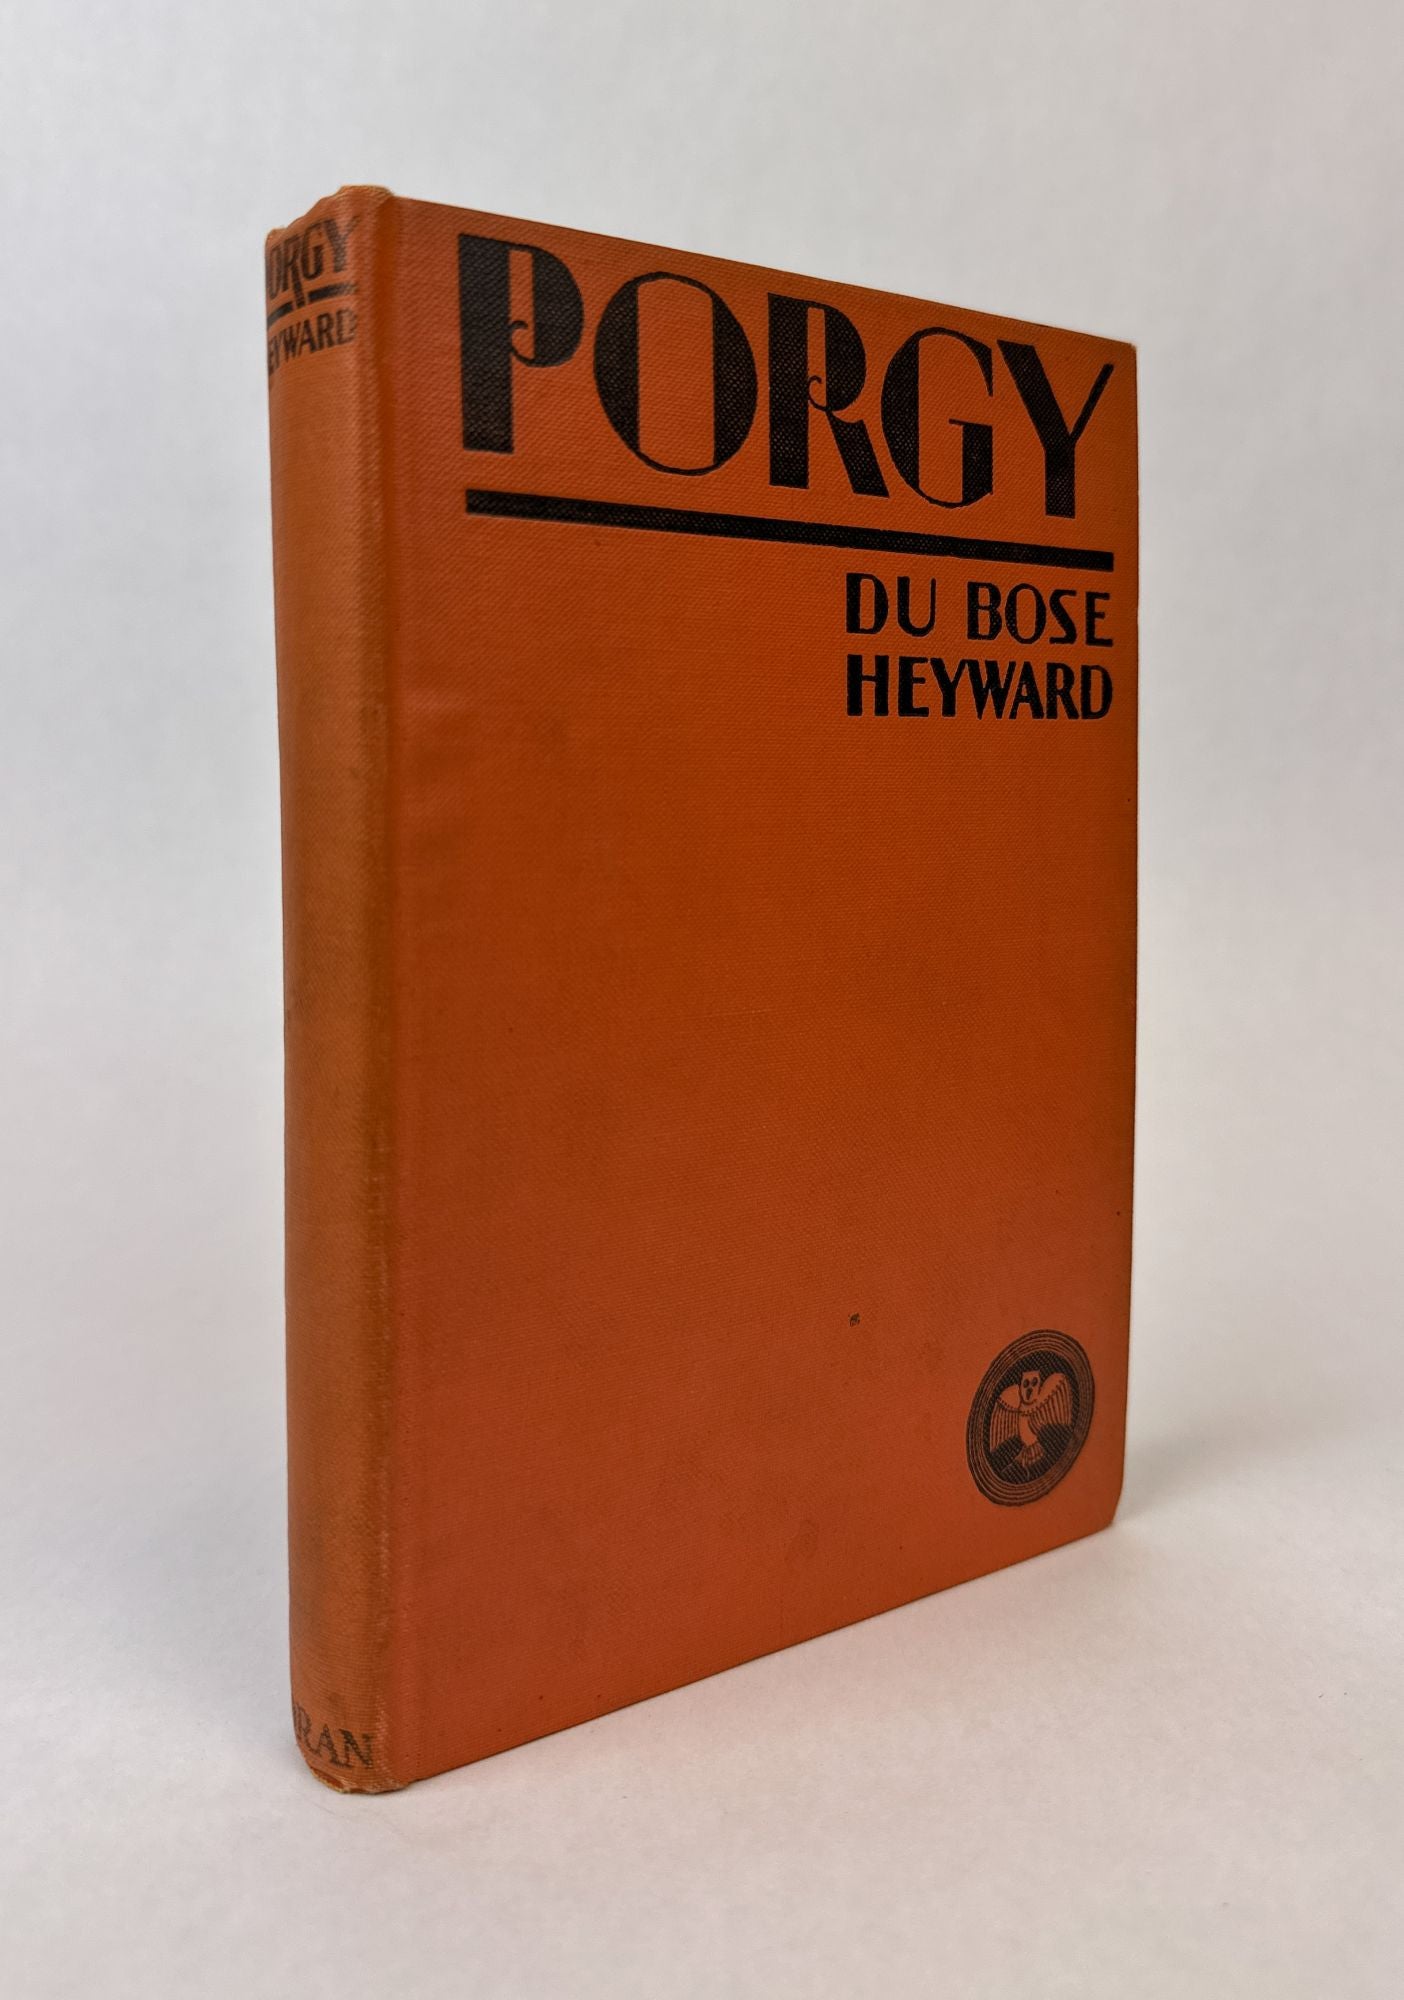 Product Image for PORGY [Benjamin Brawley's Copy]